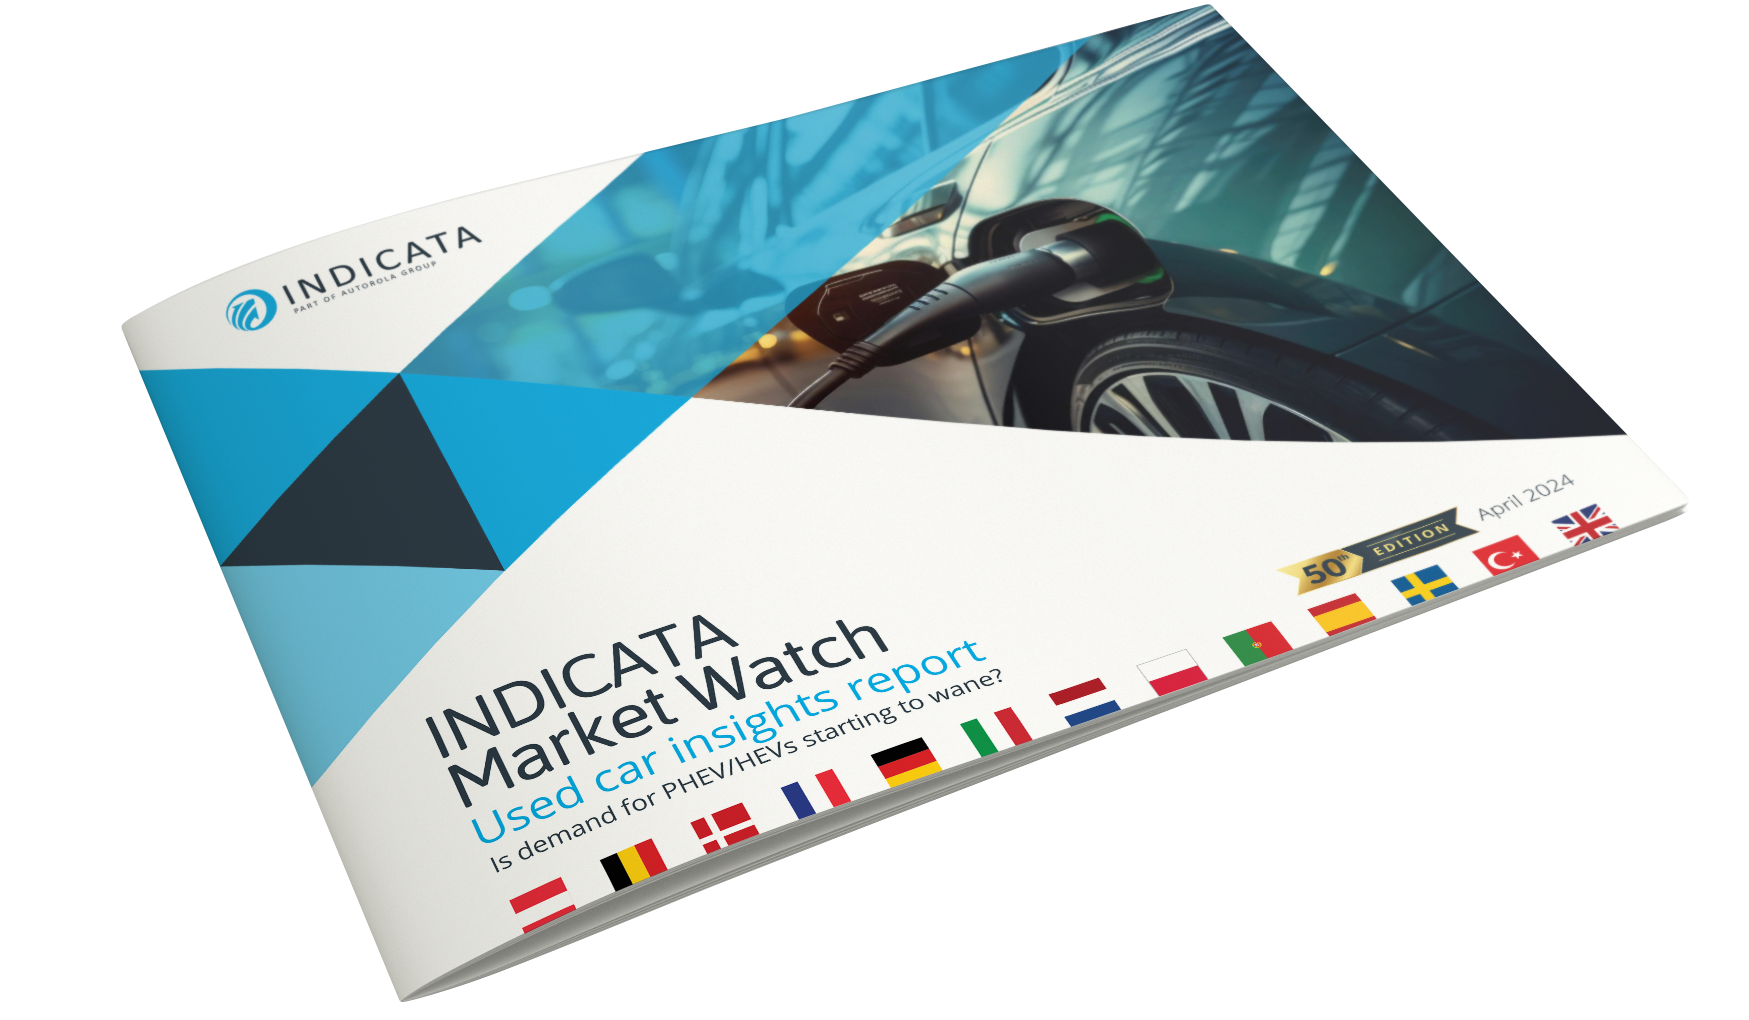 indicata market watchl